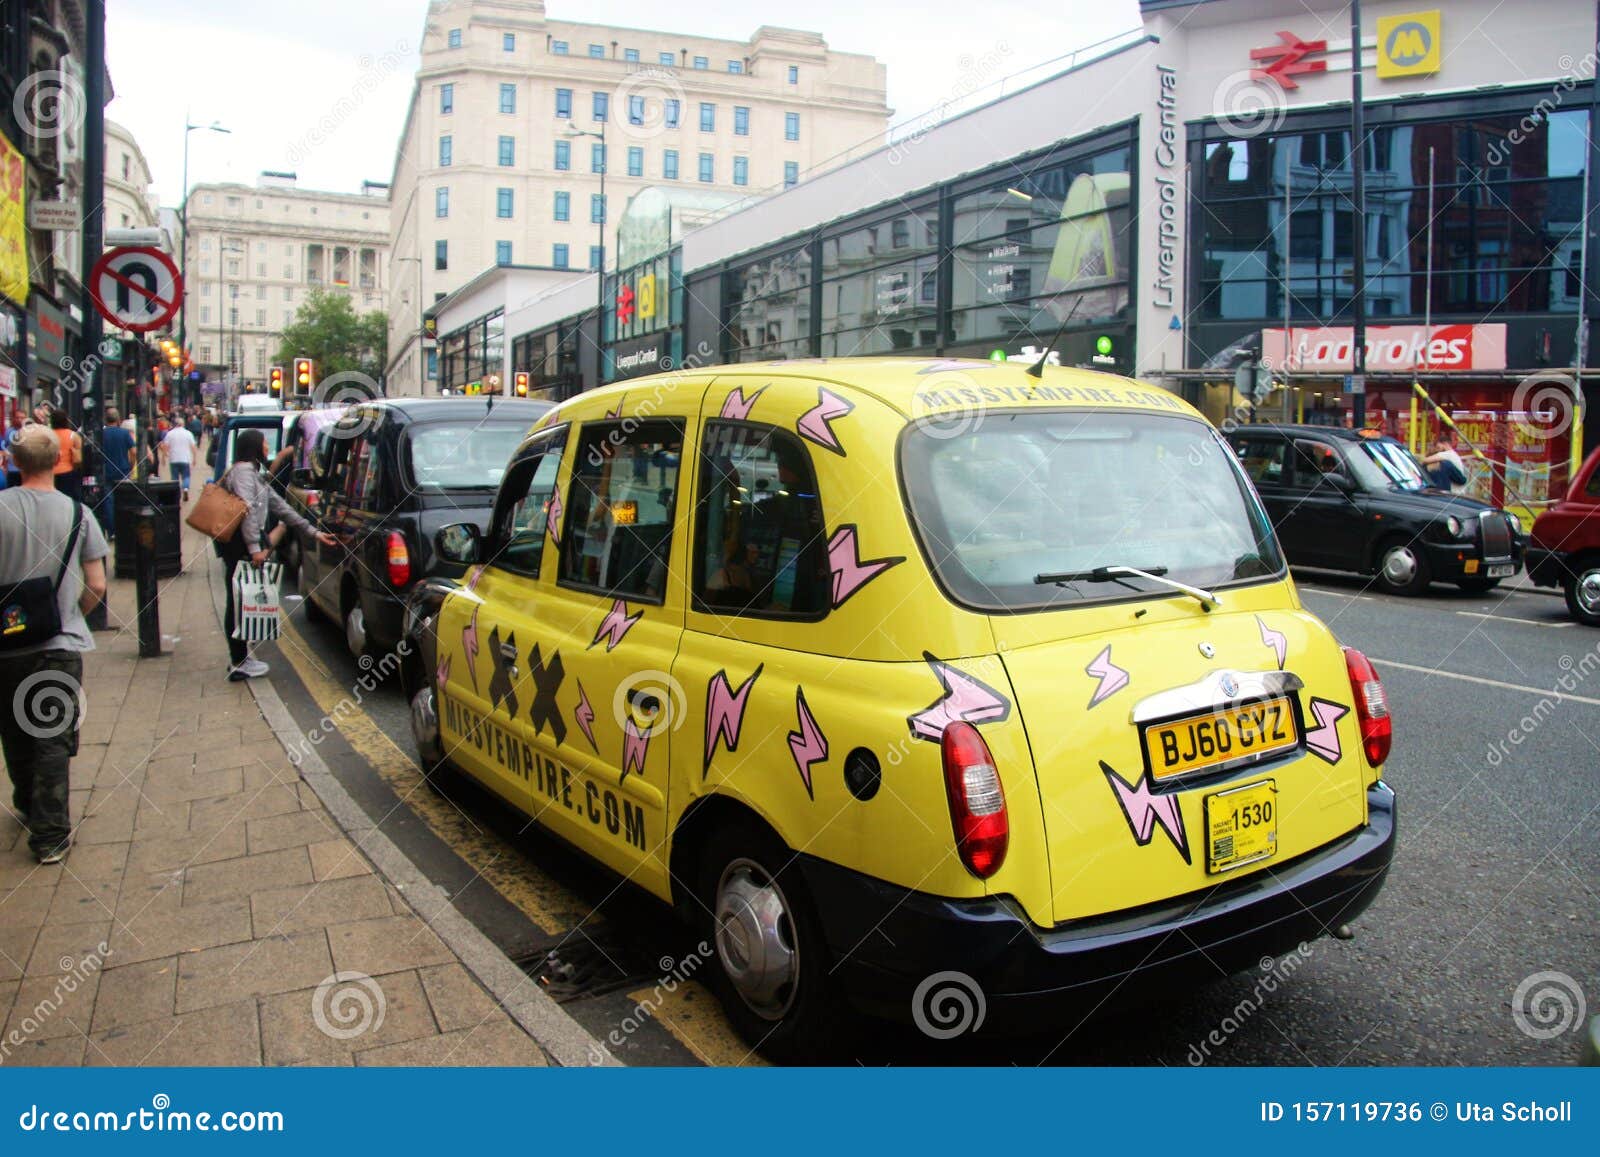 liverpool street taxi